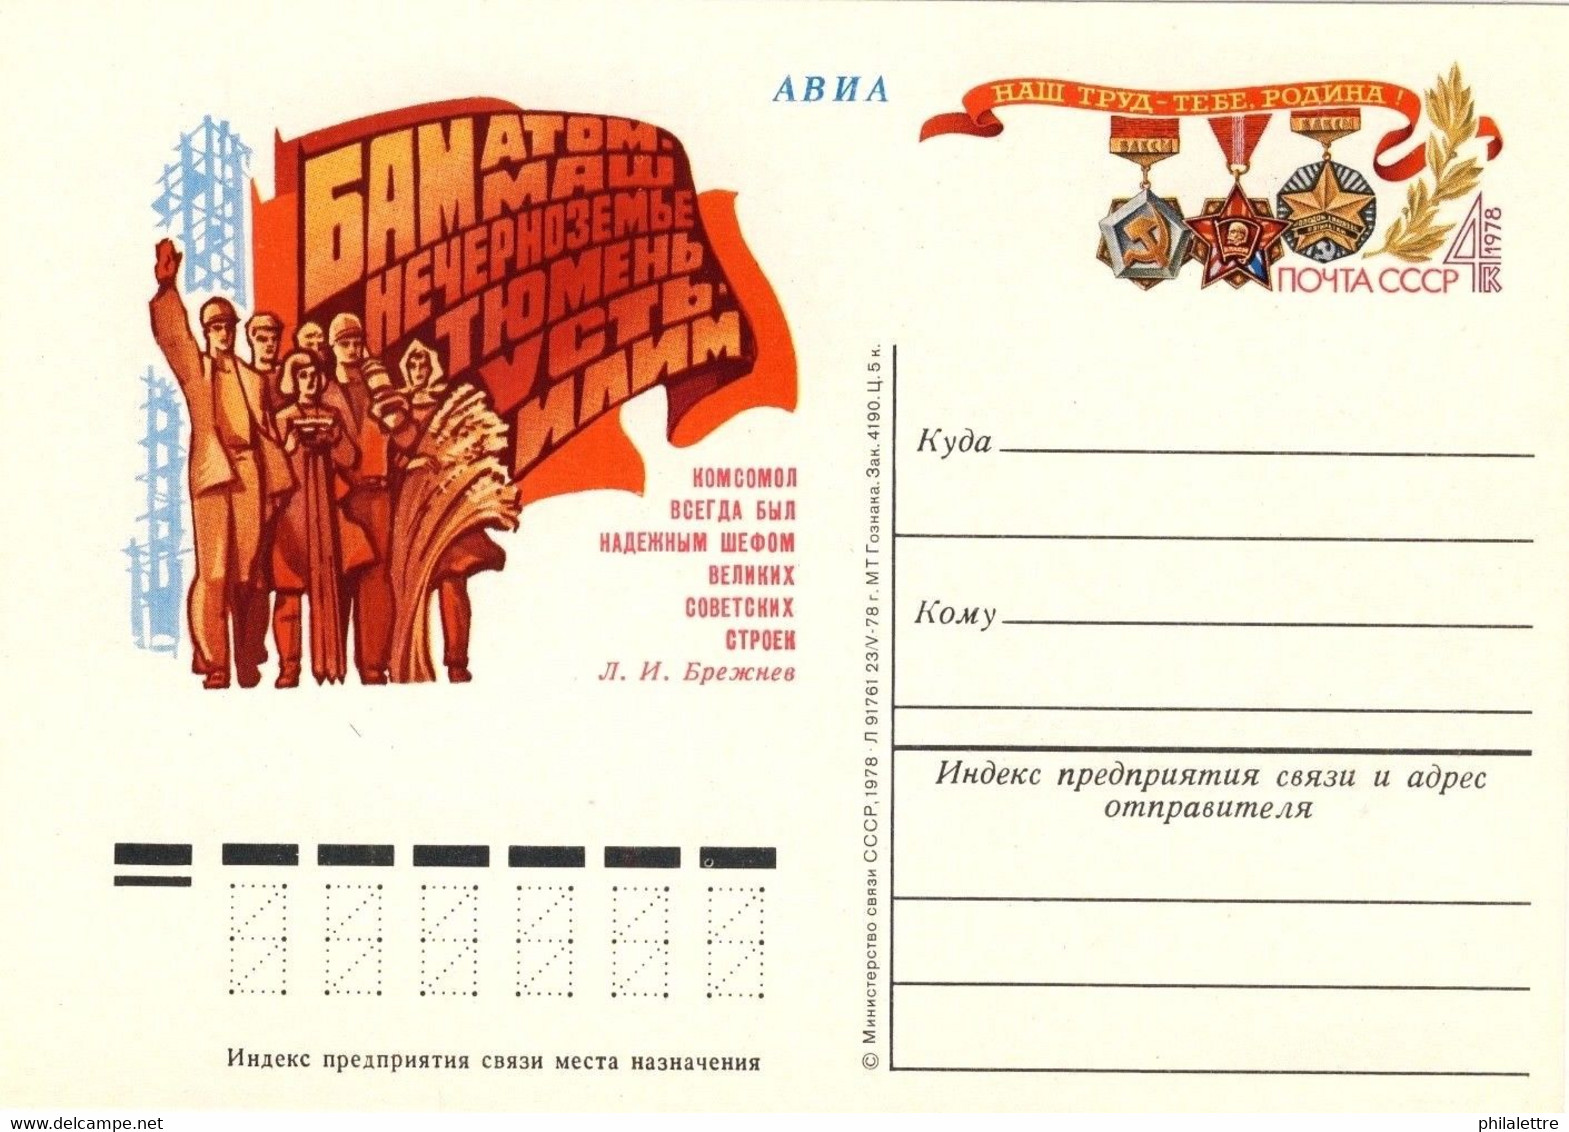 URSS Soviet Union - 1978 4kp P. CARD 60th ANNIVERSARY OF THE KOMSOMOLS Mi.PS070 - 1970-79